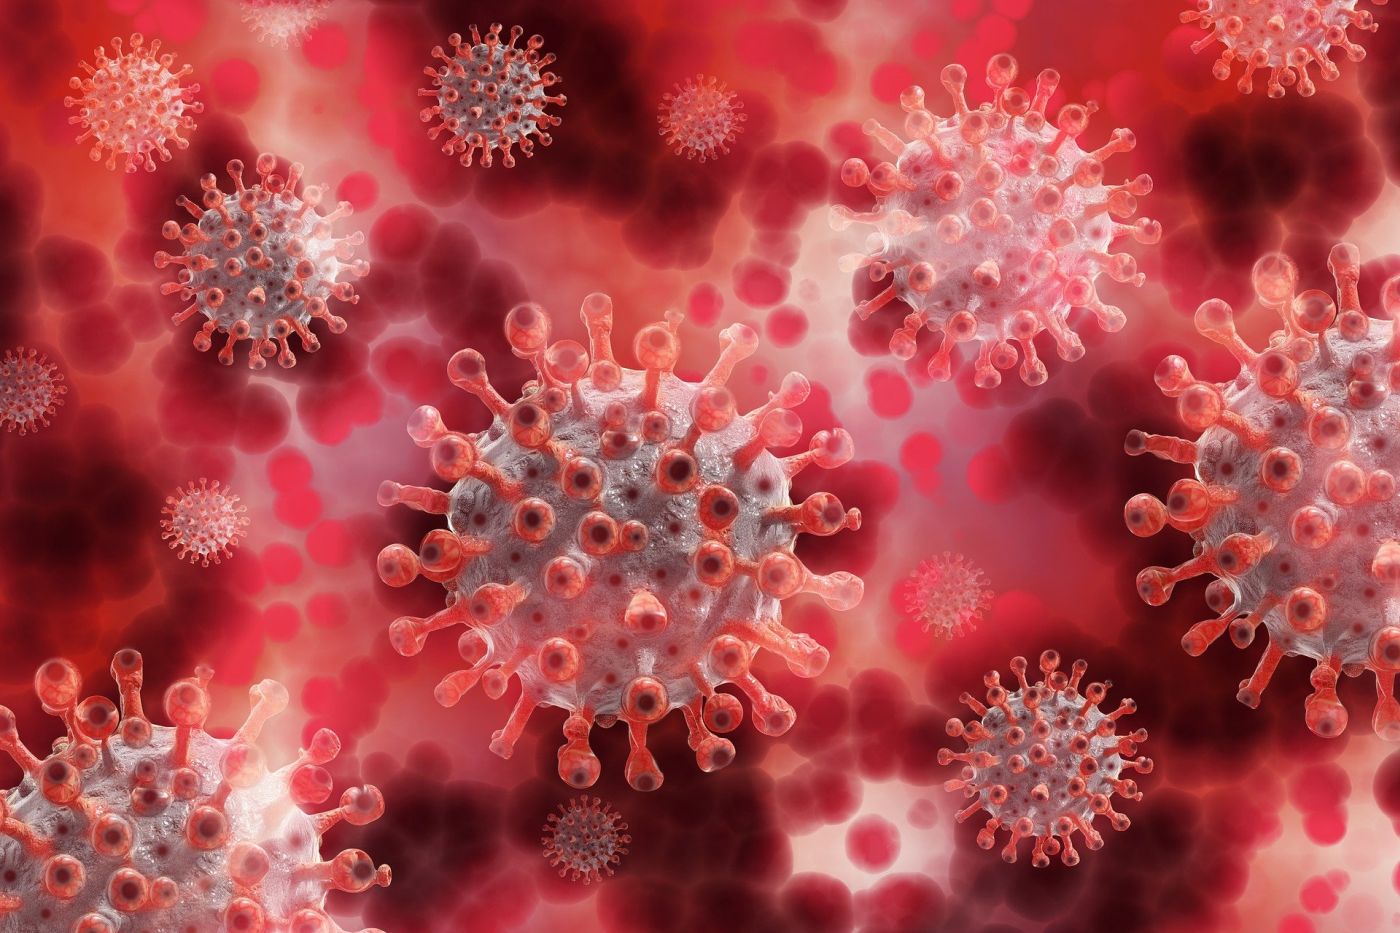 Coronavirus: 8 decese, 59 de persoane vaccinate cu doza 1